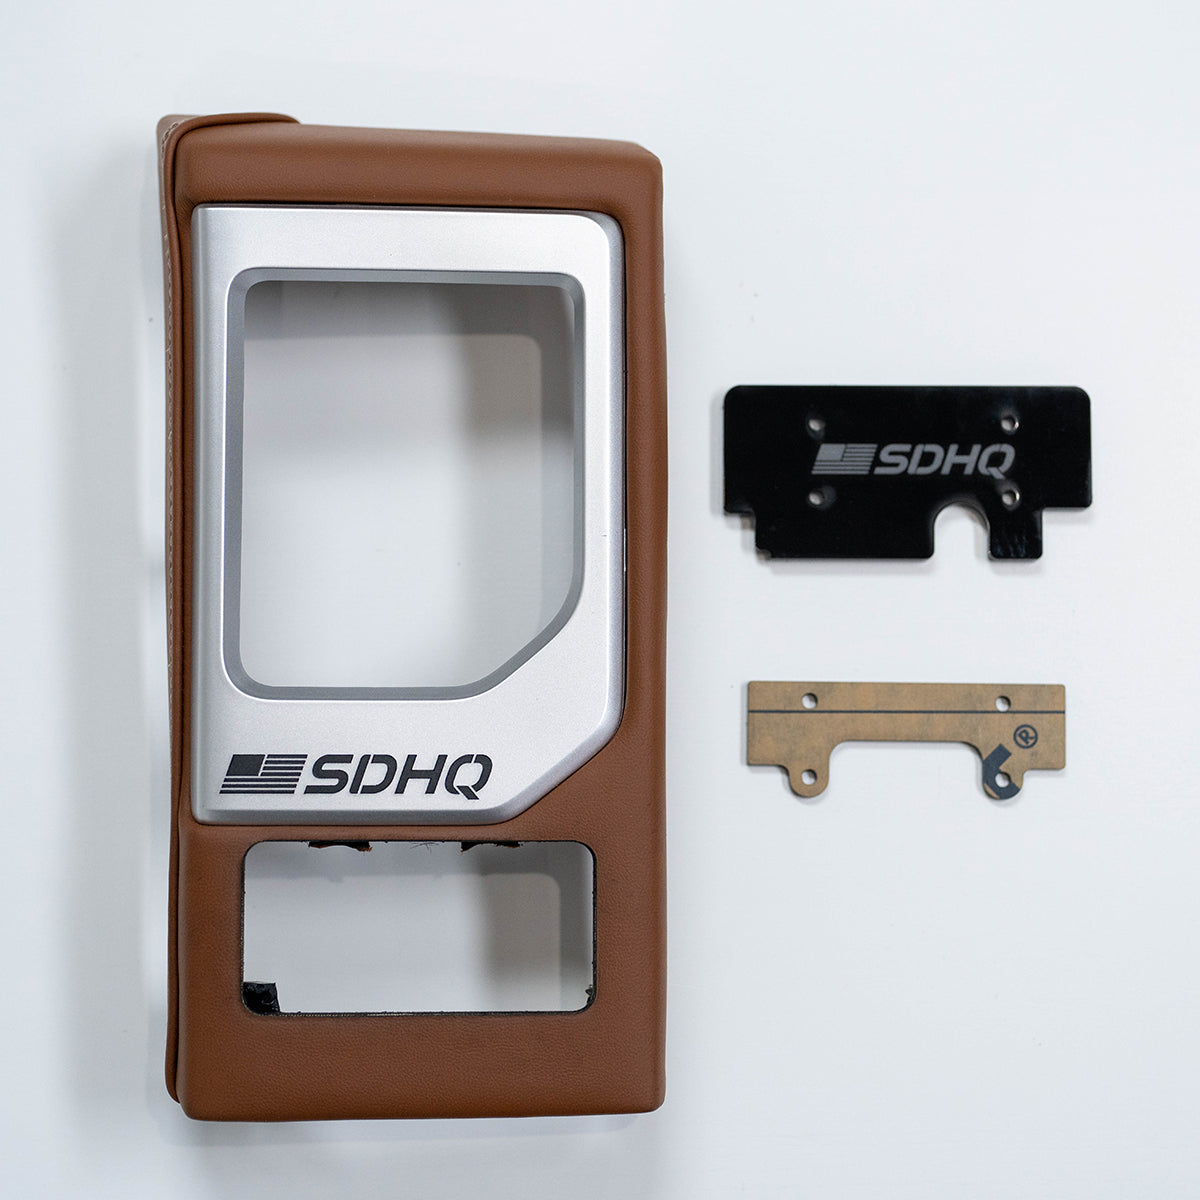 '14-21 Toyota Tundra SDHQ Shifter Panel Switch-Pros SP-9100 Keypad Mount